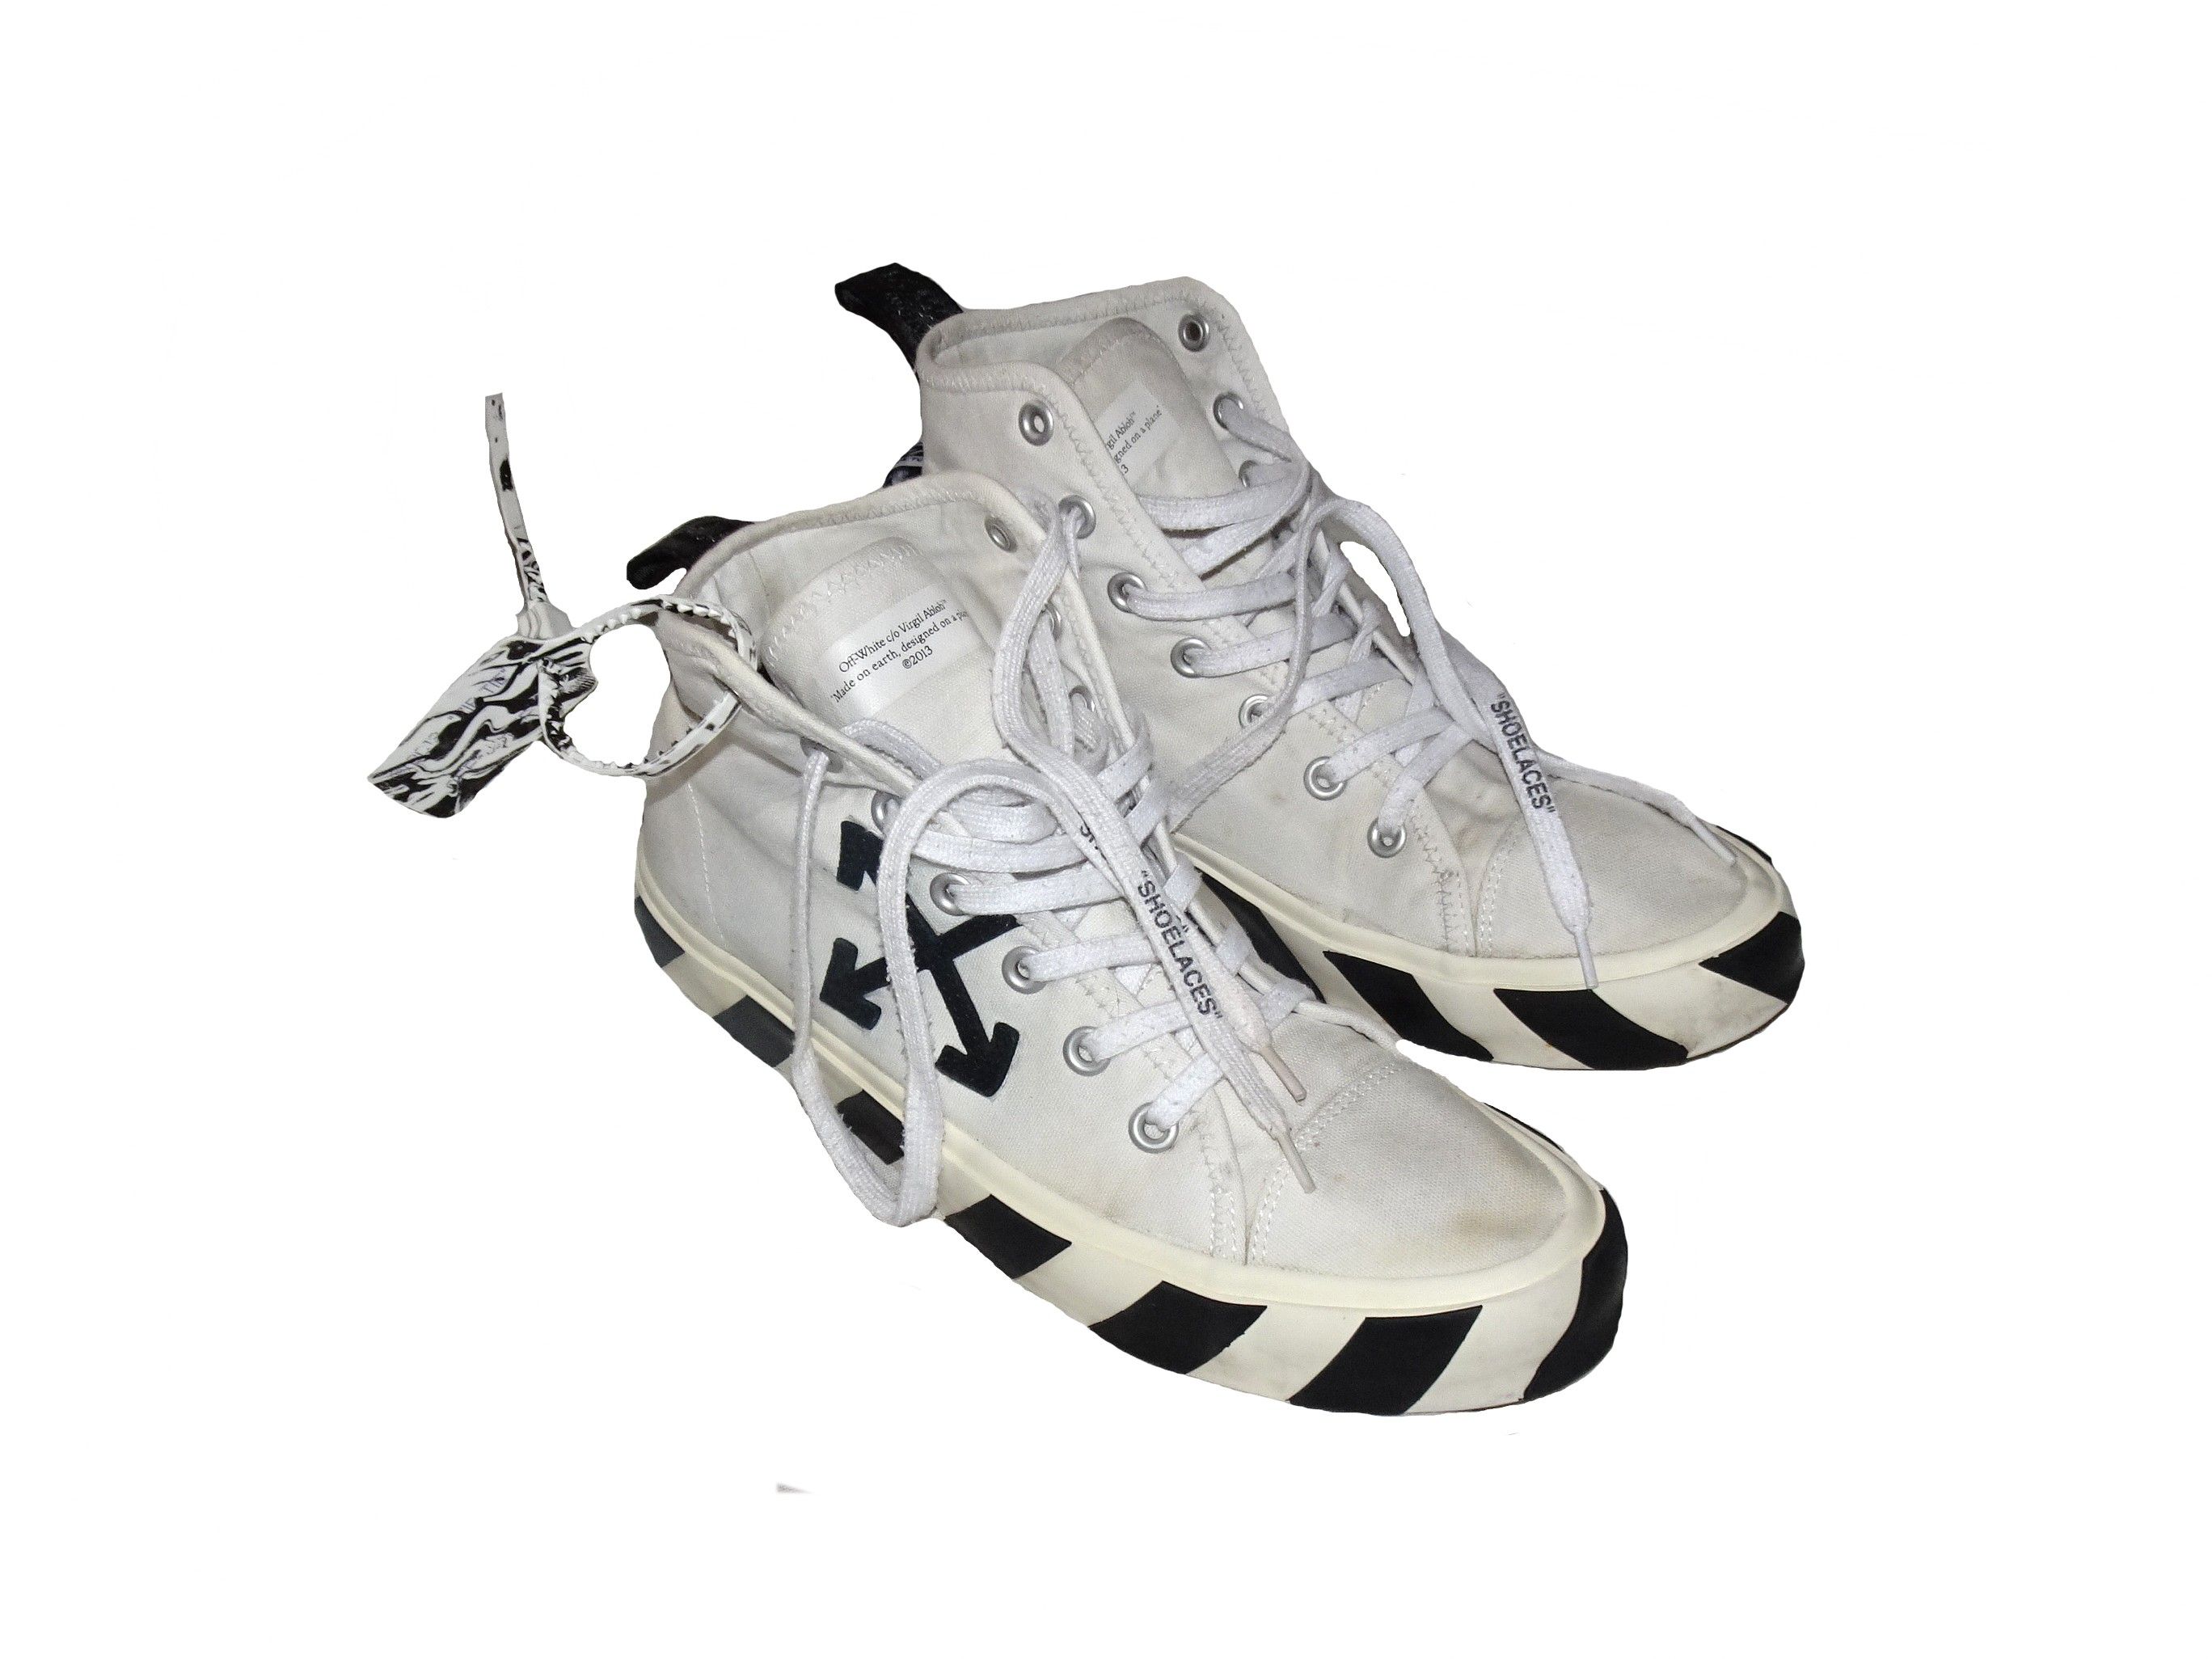 🔥$4,000 Sneakers 🔥 *Louis Vuitton X OFF WHITE X Jordan* By Ceeze